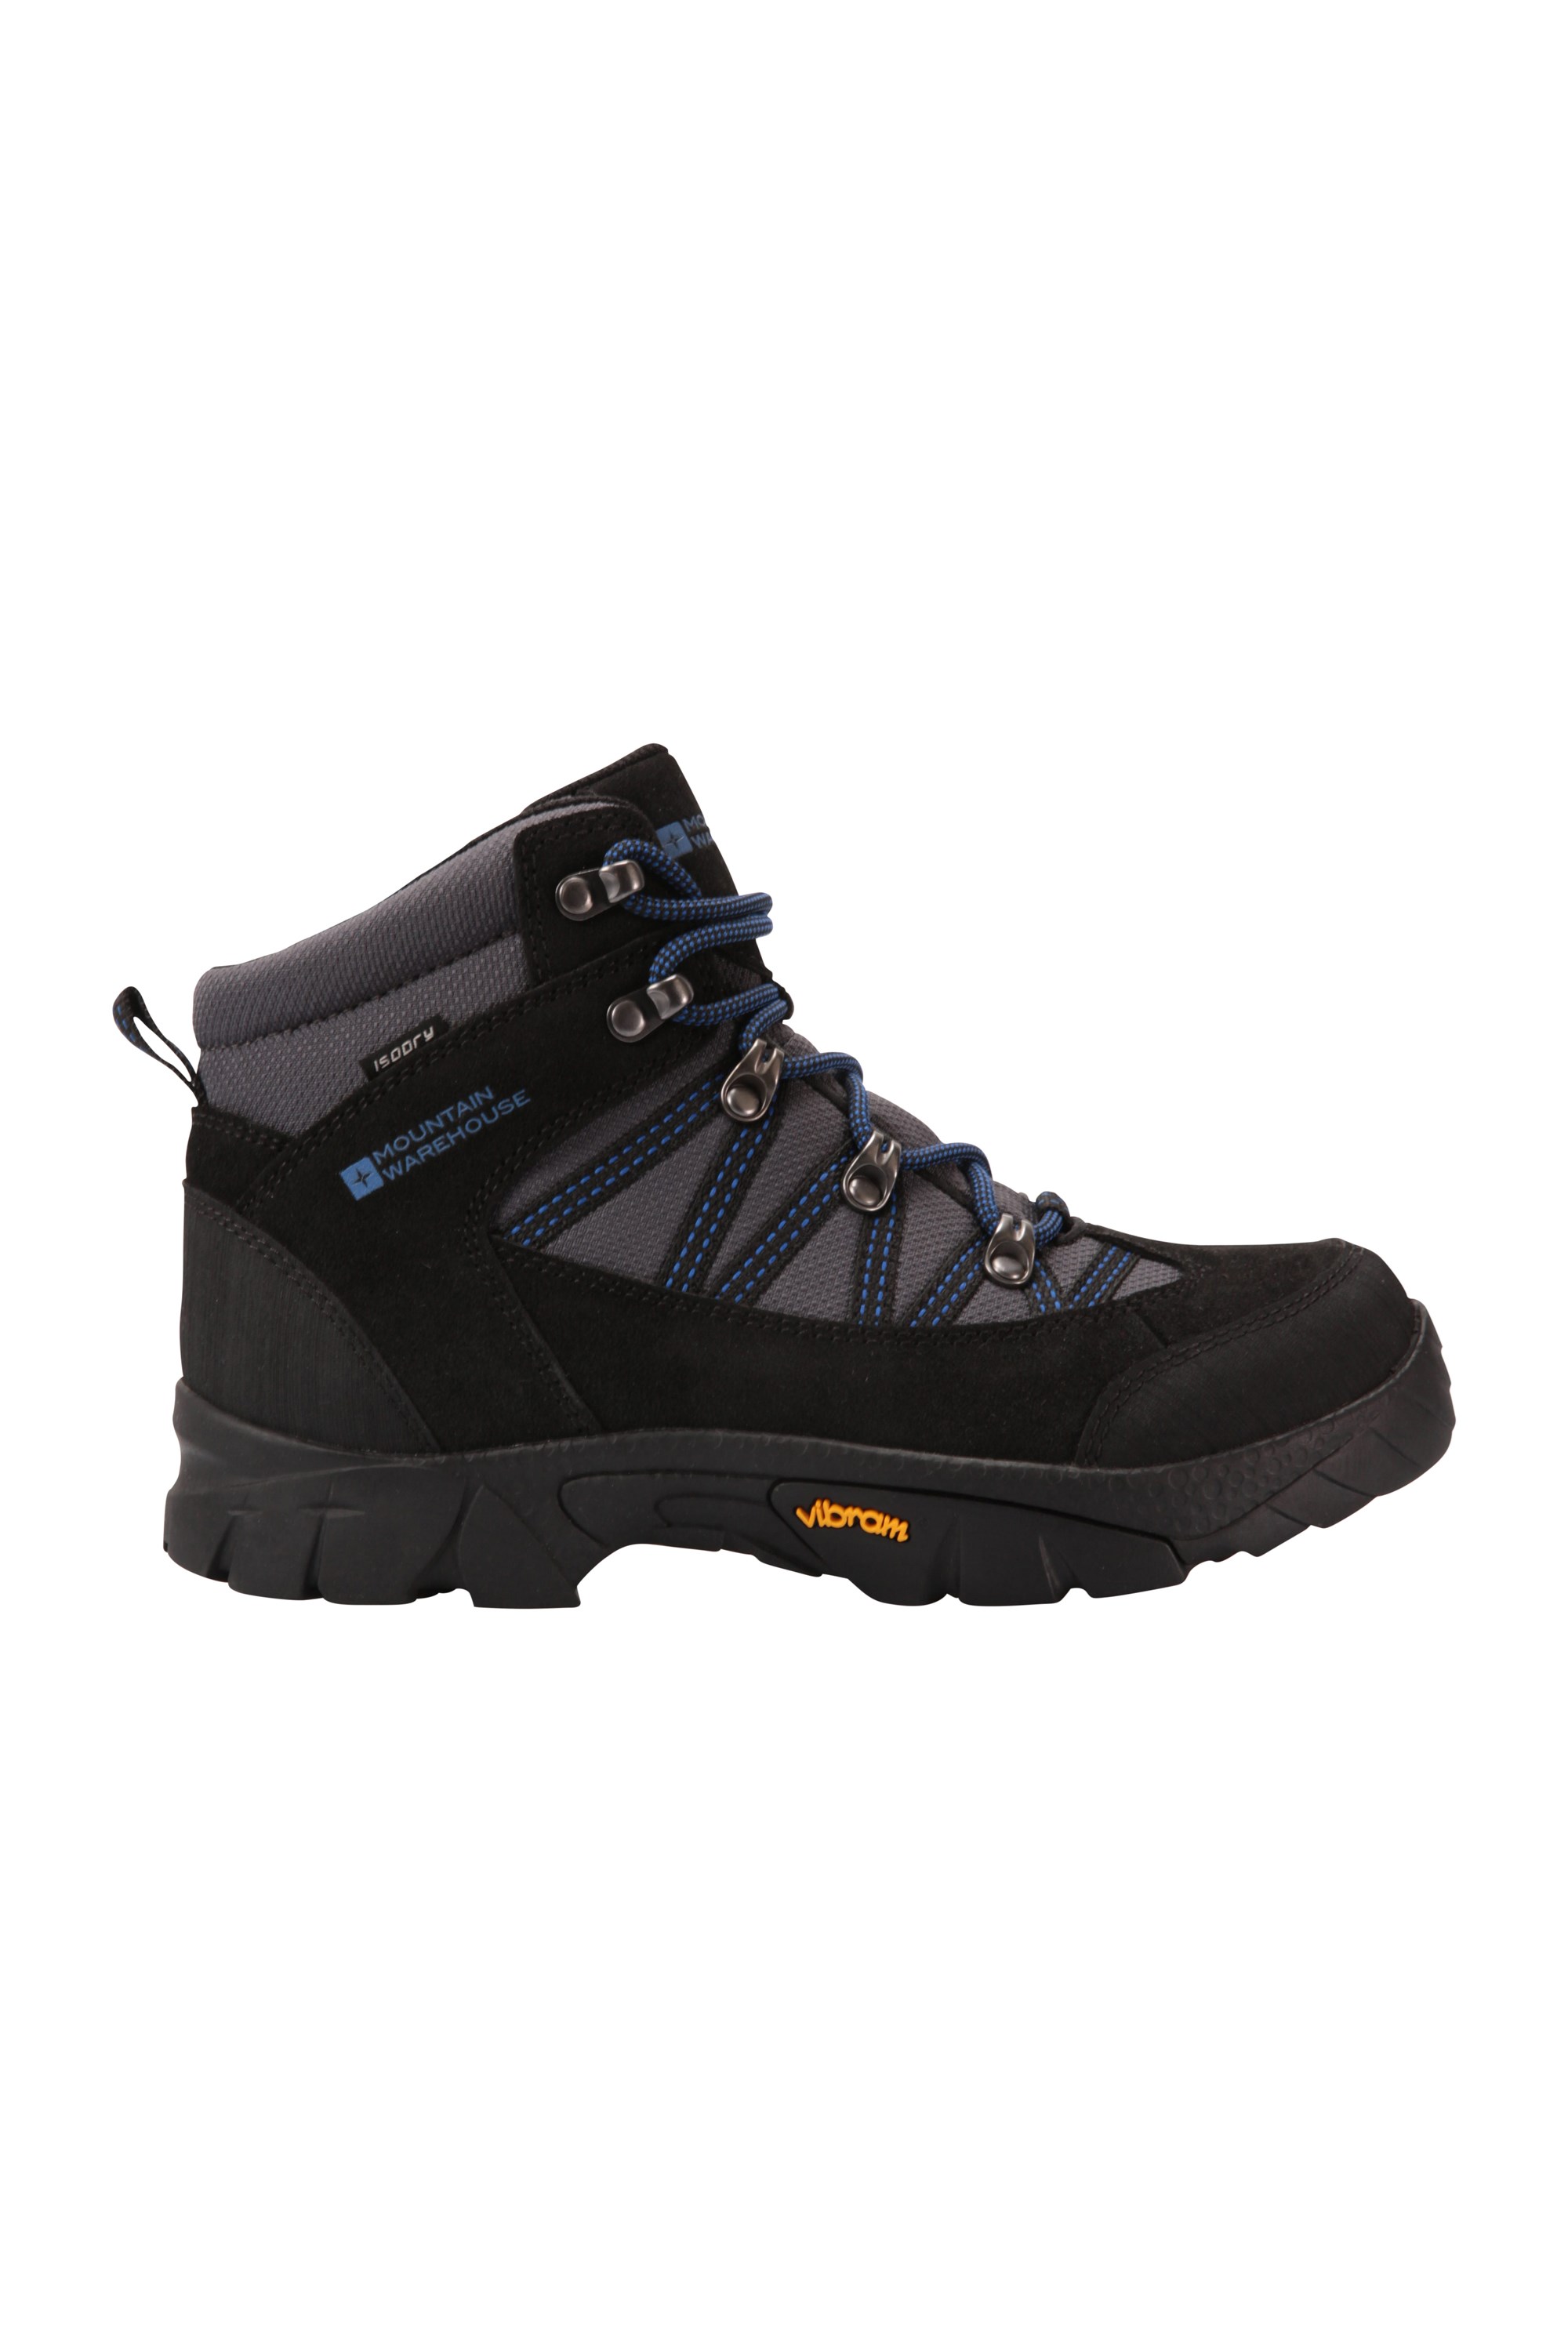 Edinburgh Vibram Youth Waterproof Walking Boots | Mountain Warehouse GB